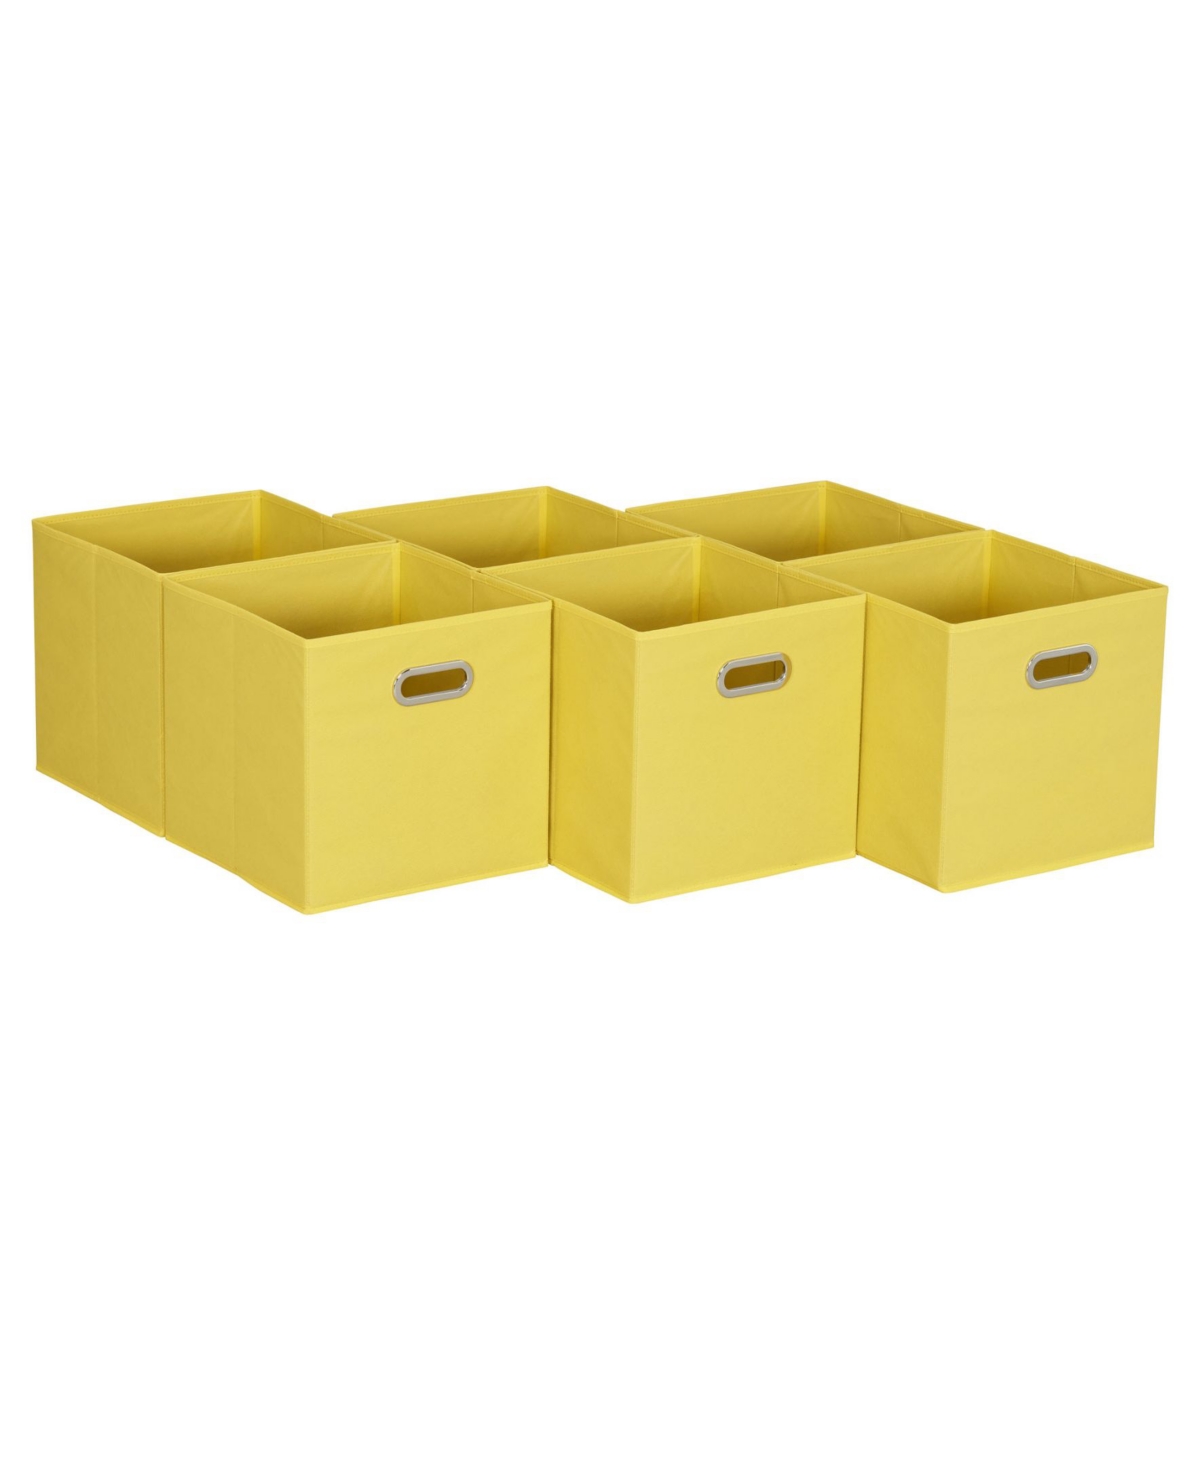 Household Essentials Fabric Cube Storage Bins Set, 6 Piece In Bright Yellow